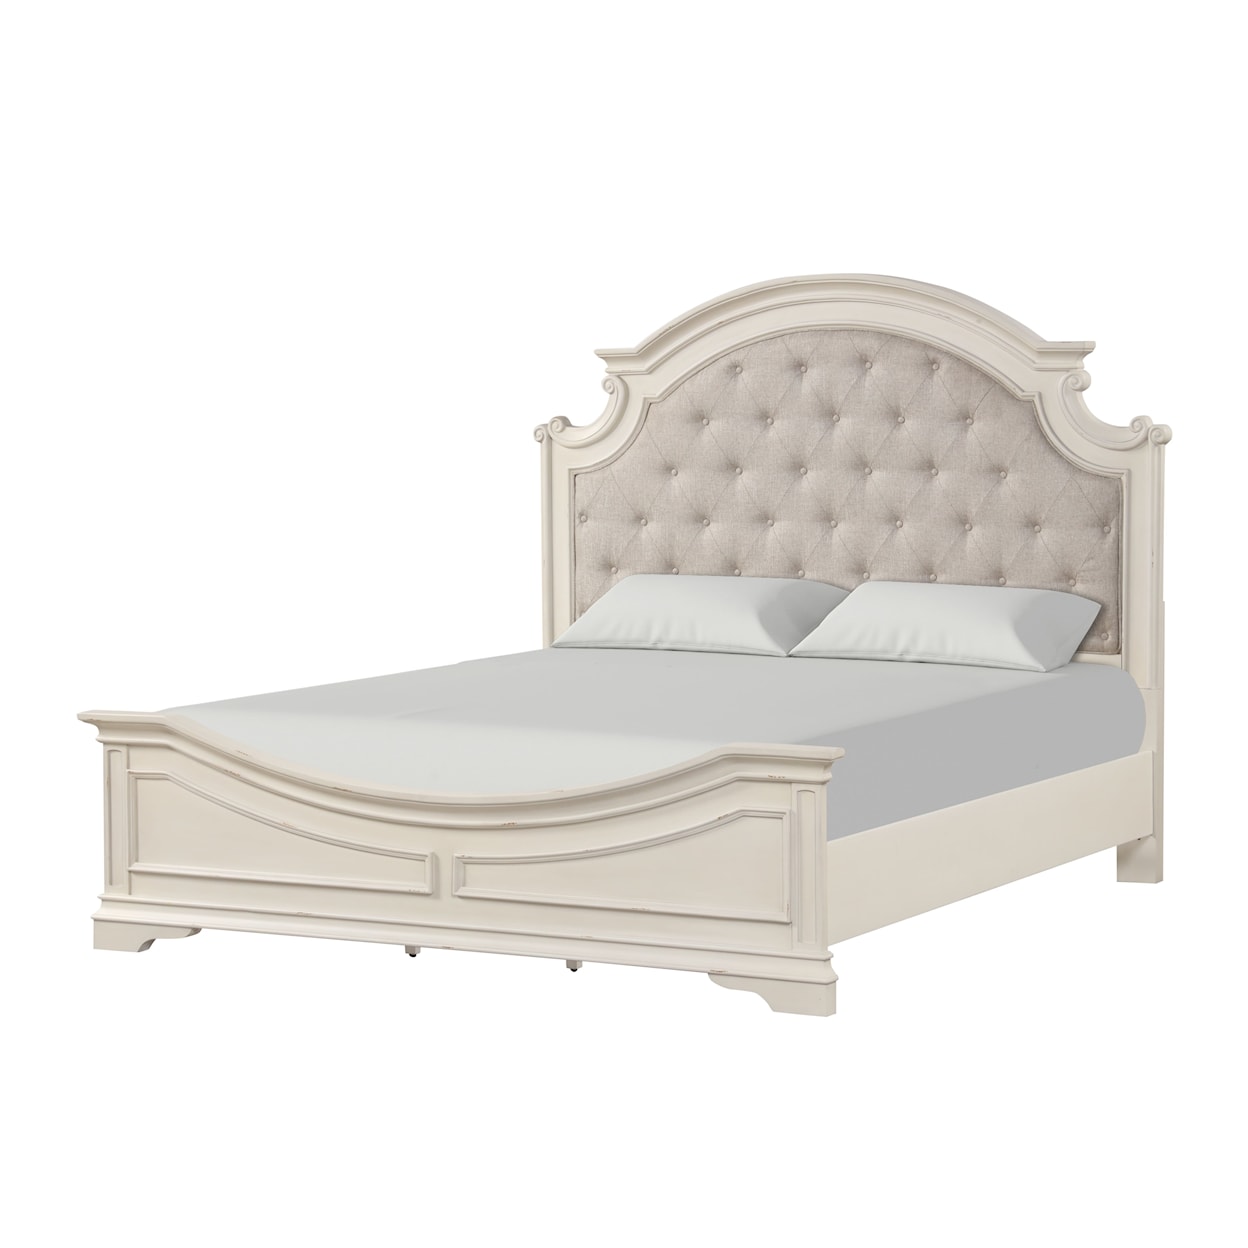 Alex's Furniture Terra King Bed